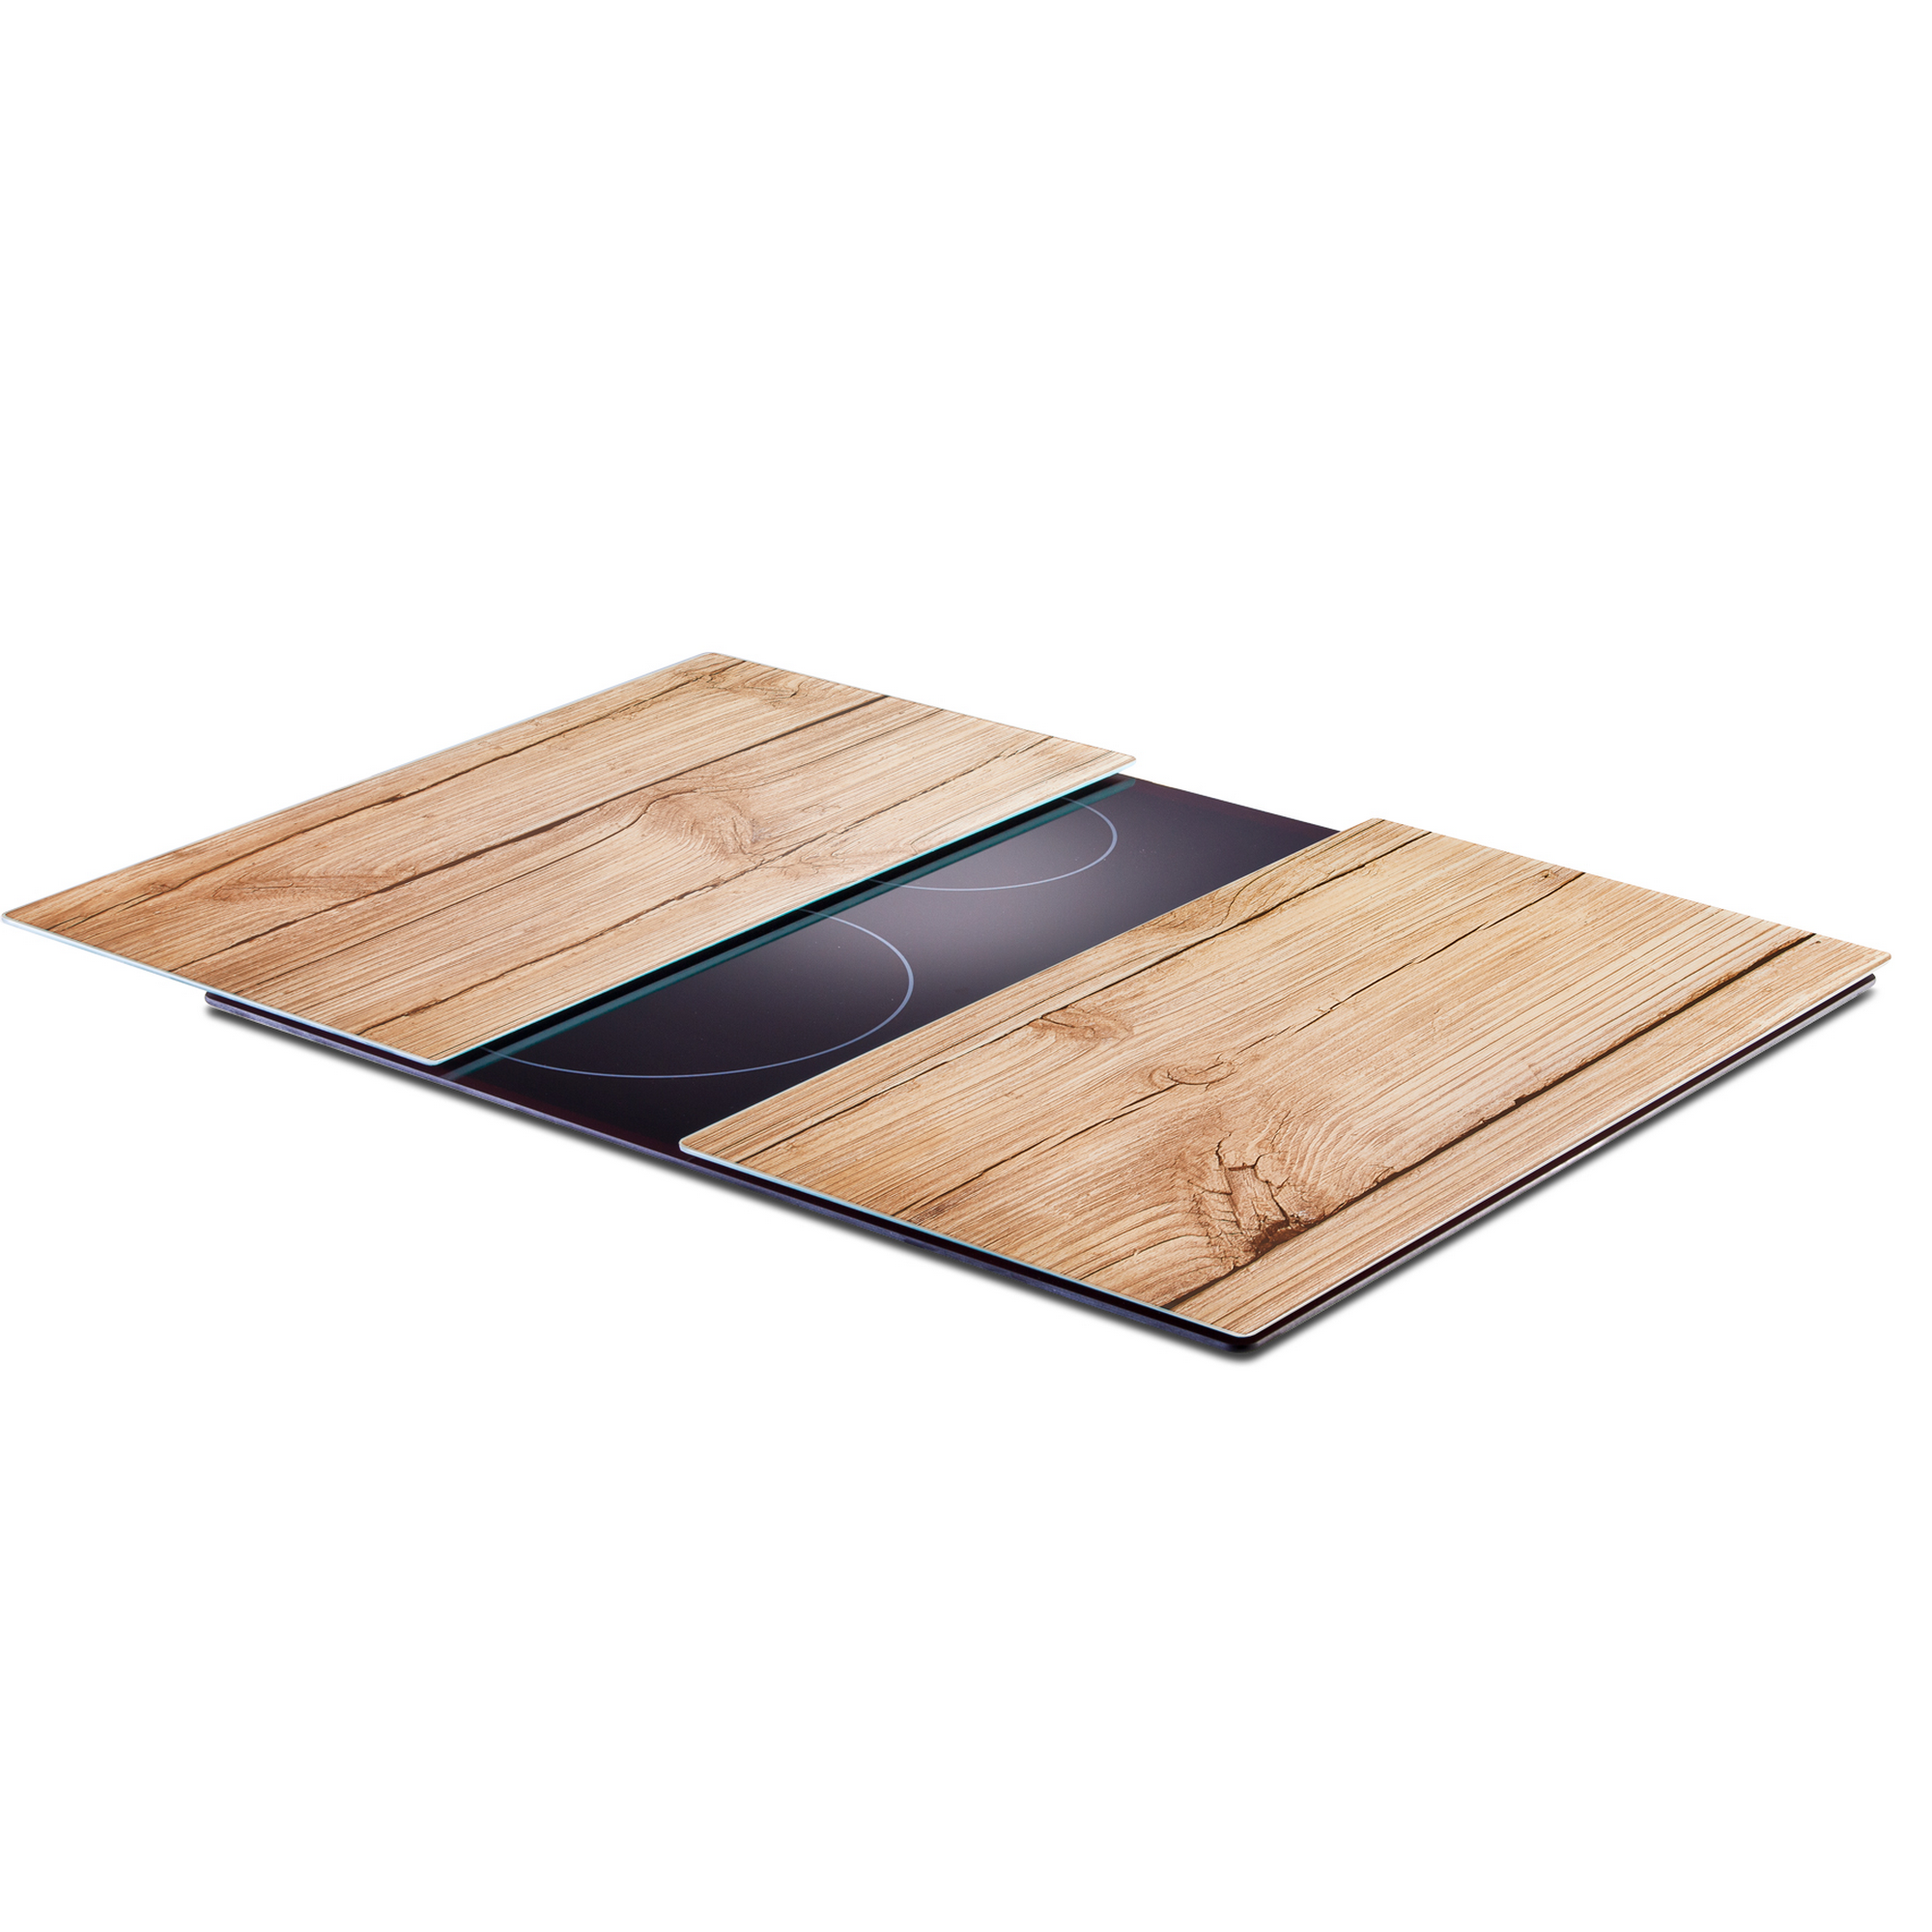 Schneidebrett 'Wood' mehrfarbig 52 x 0,76 x 30 cm + product picture